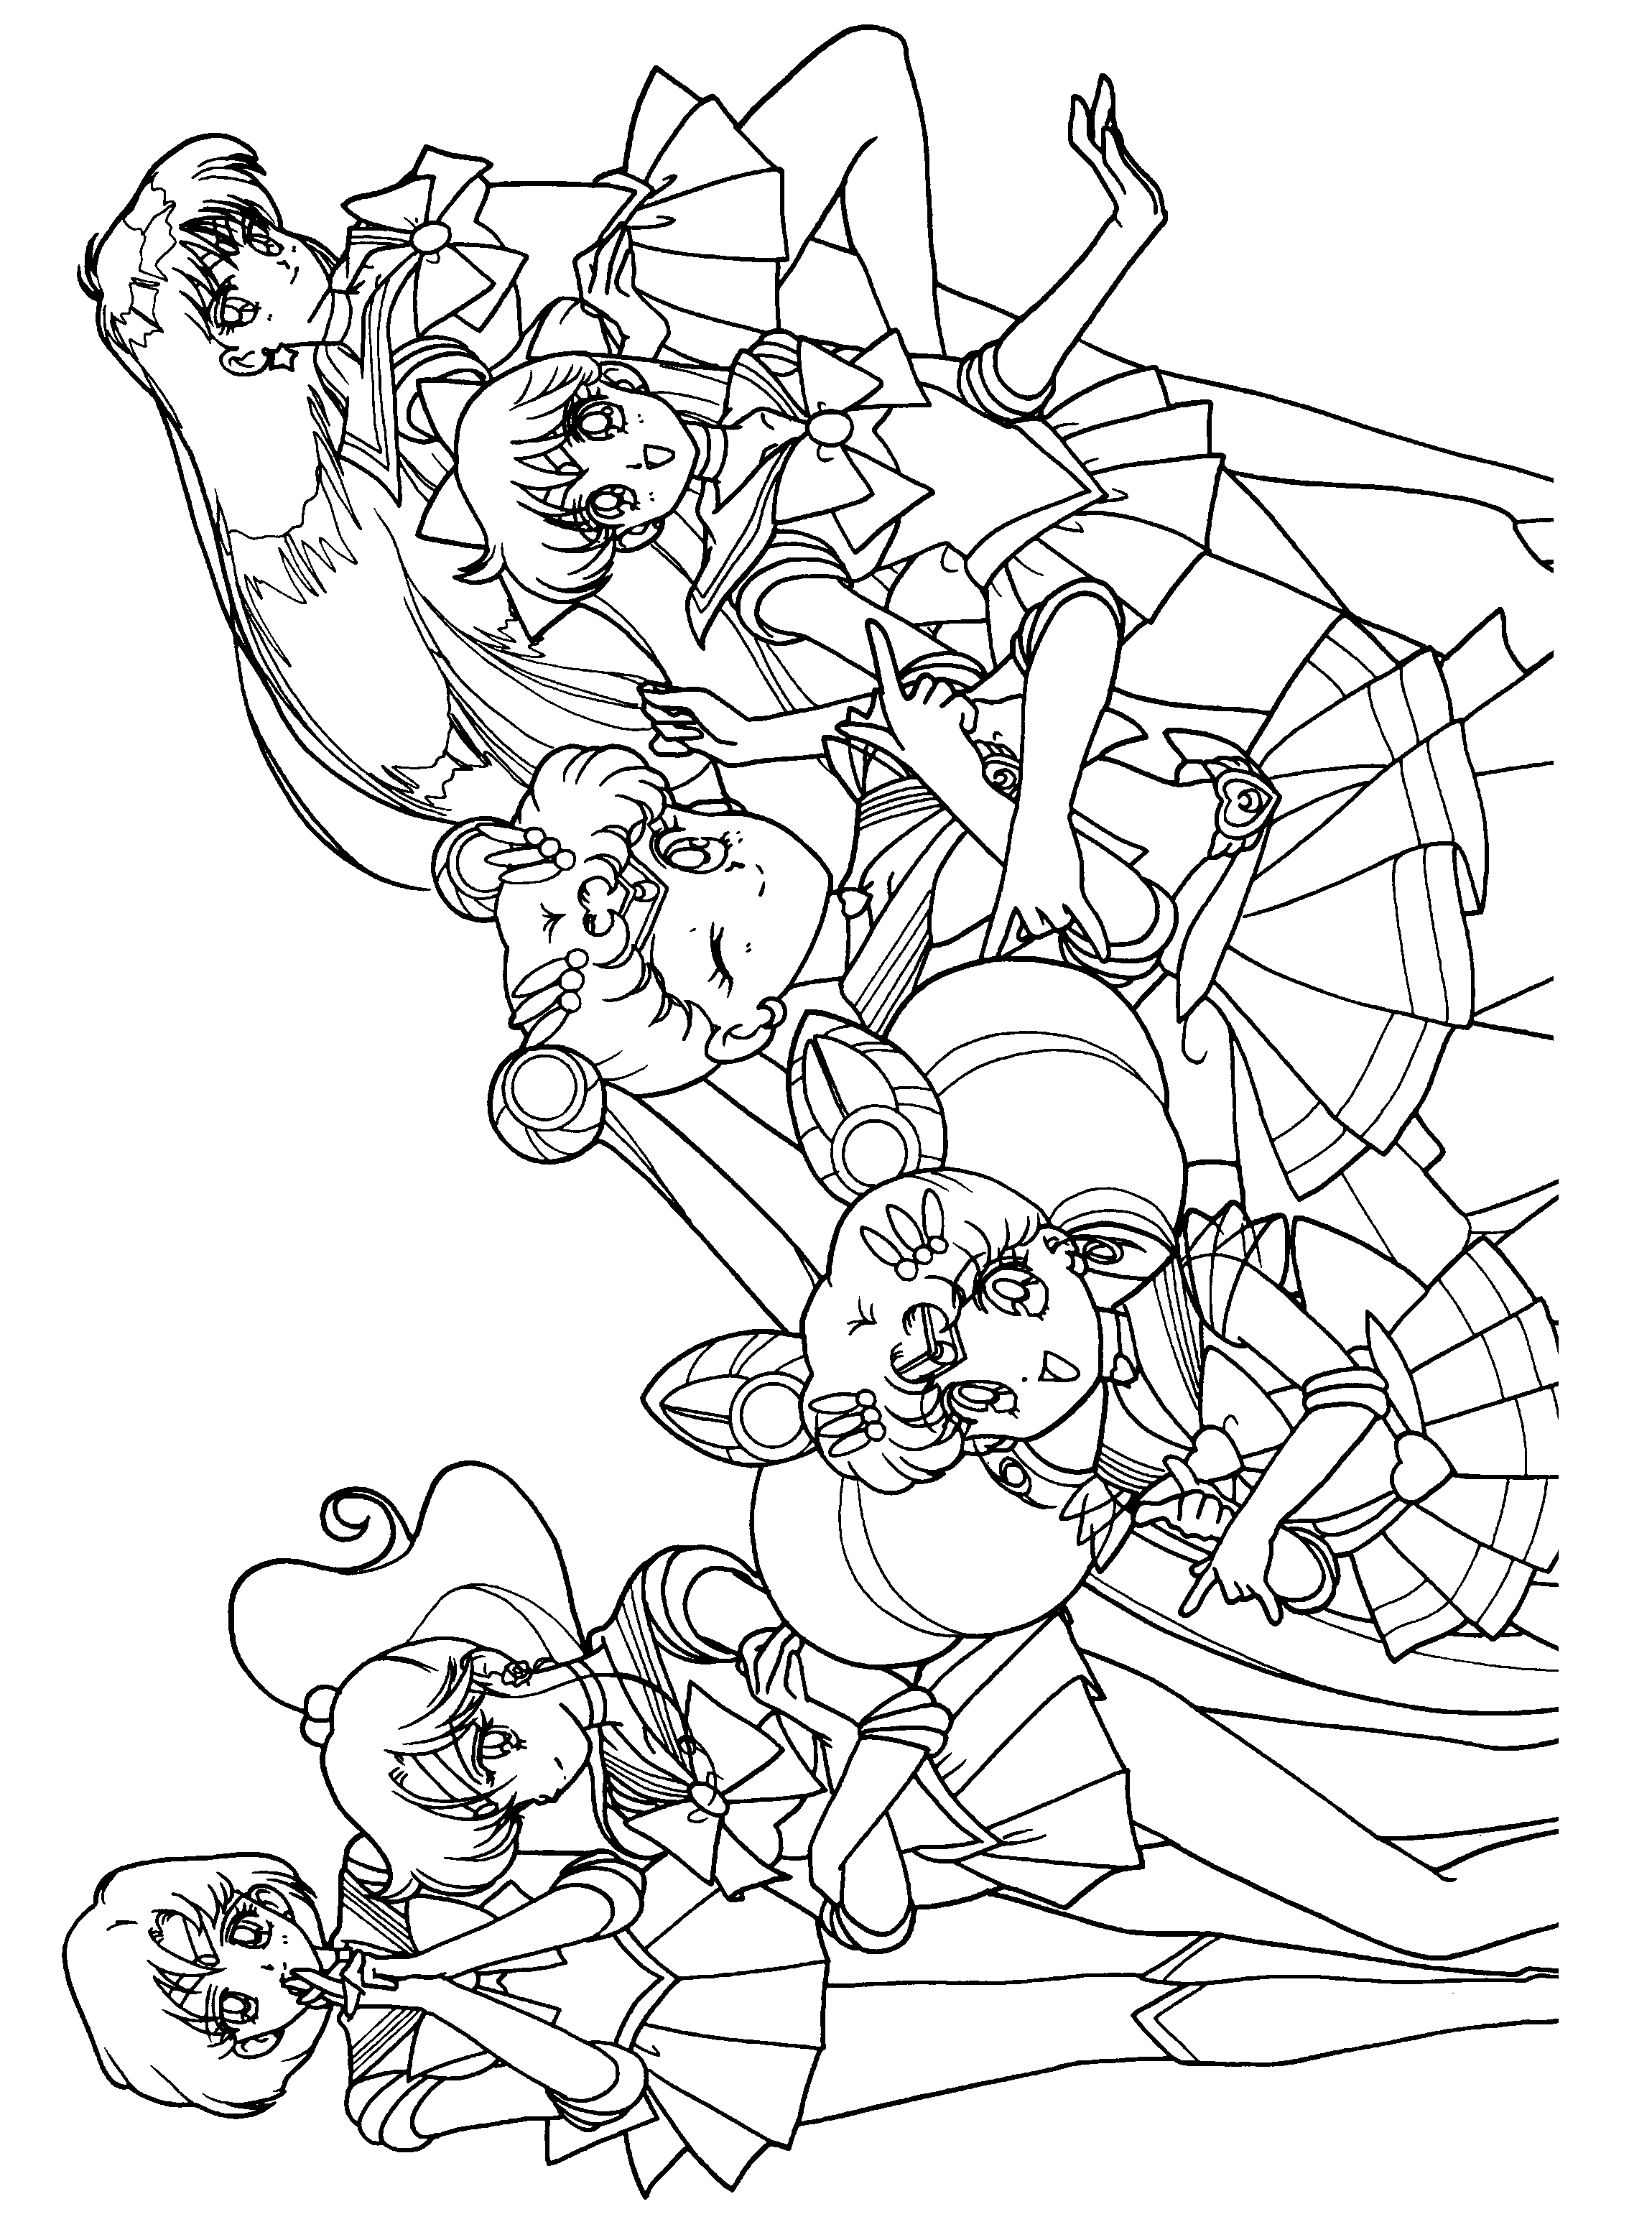 Sailormoon Malvorlagen